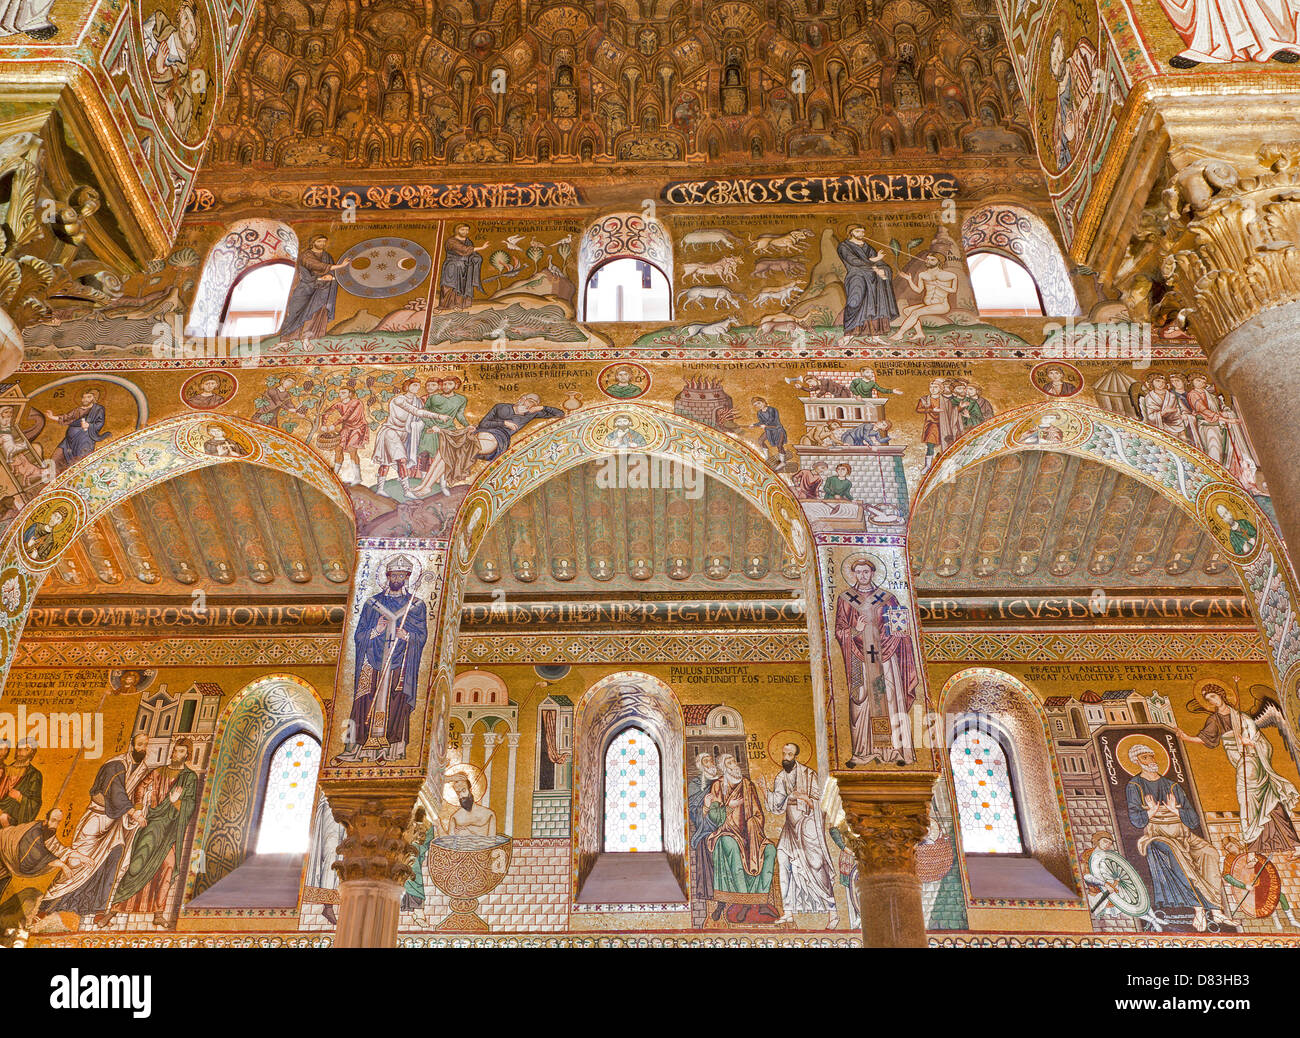 PALERMO - 8. APRIL: Mosaik im Kirchenschiff der Cappella Palatina - Cappella Palatina Stockfoto